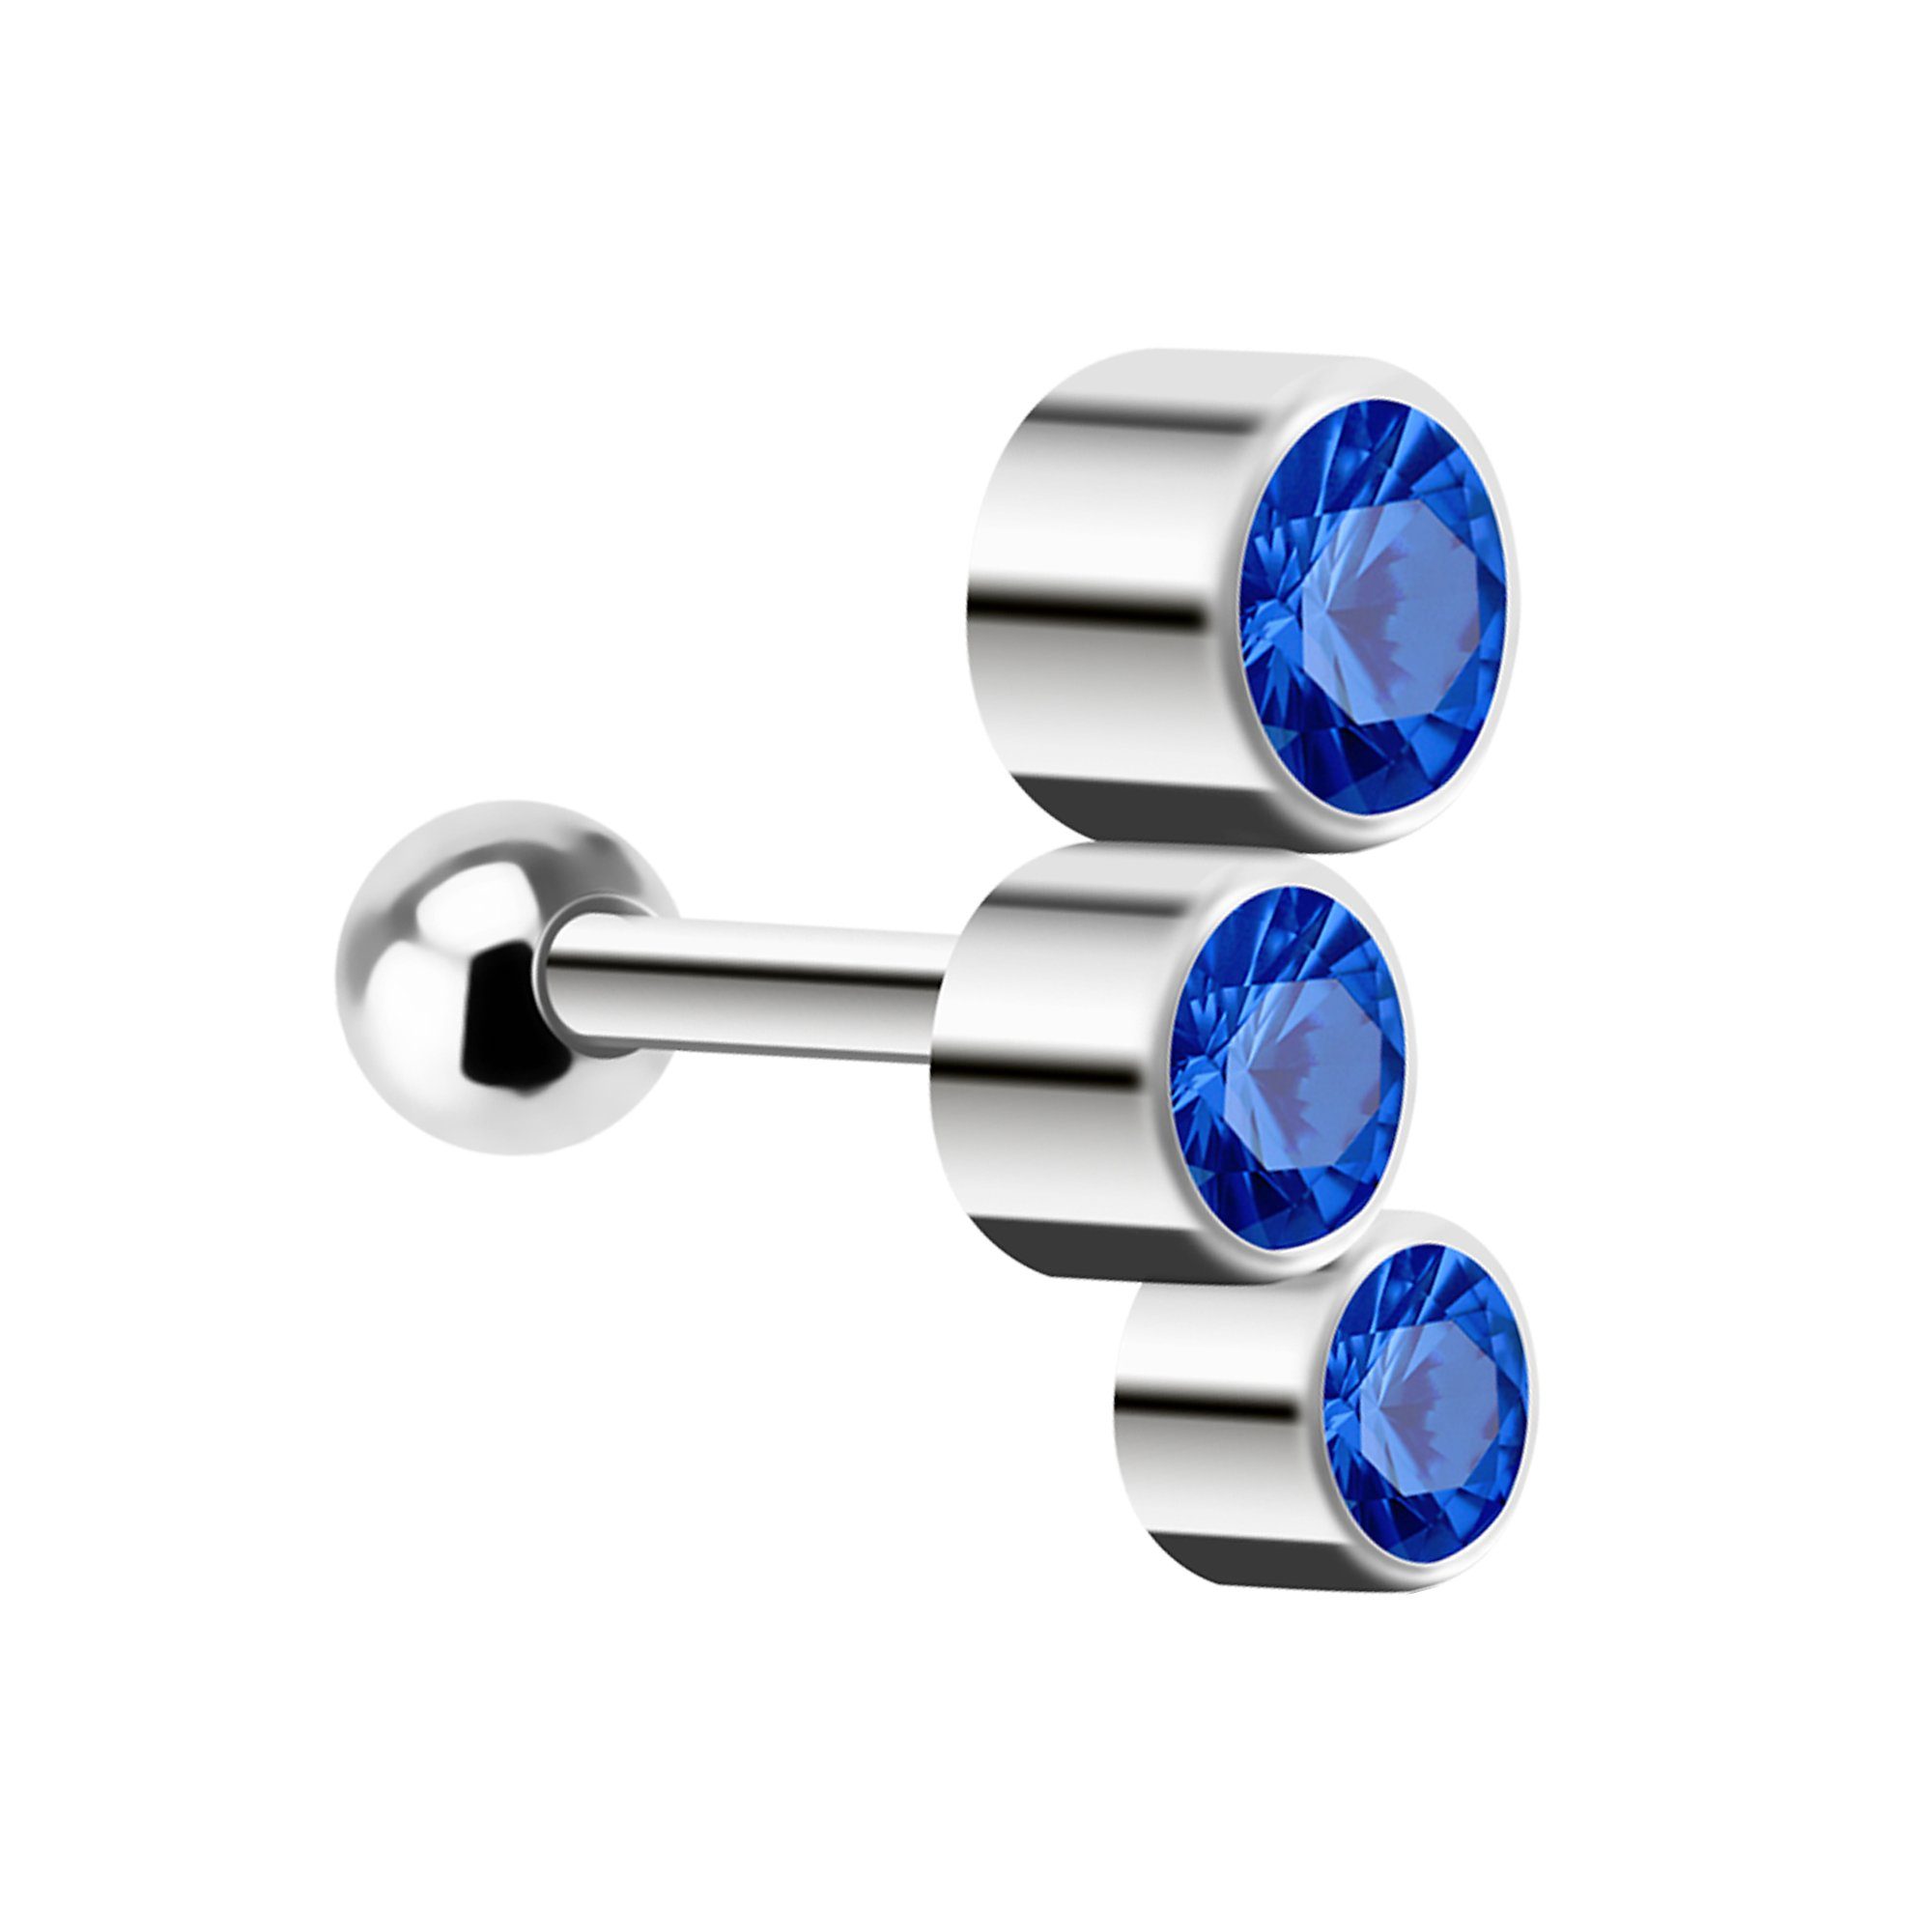 Triple Taffstyle Kristall blau Kugeln, Ohrpiercing Stecker Helix Cartilage Ohr Knorpel Piercing Barbell Ohr Piercing-Set Glitzer Tragus Stab